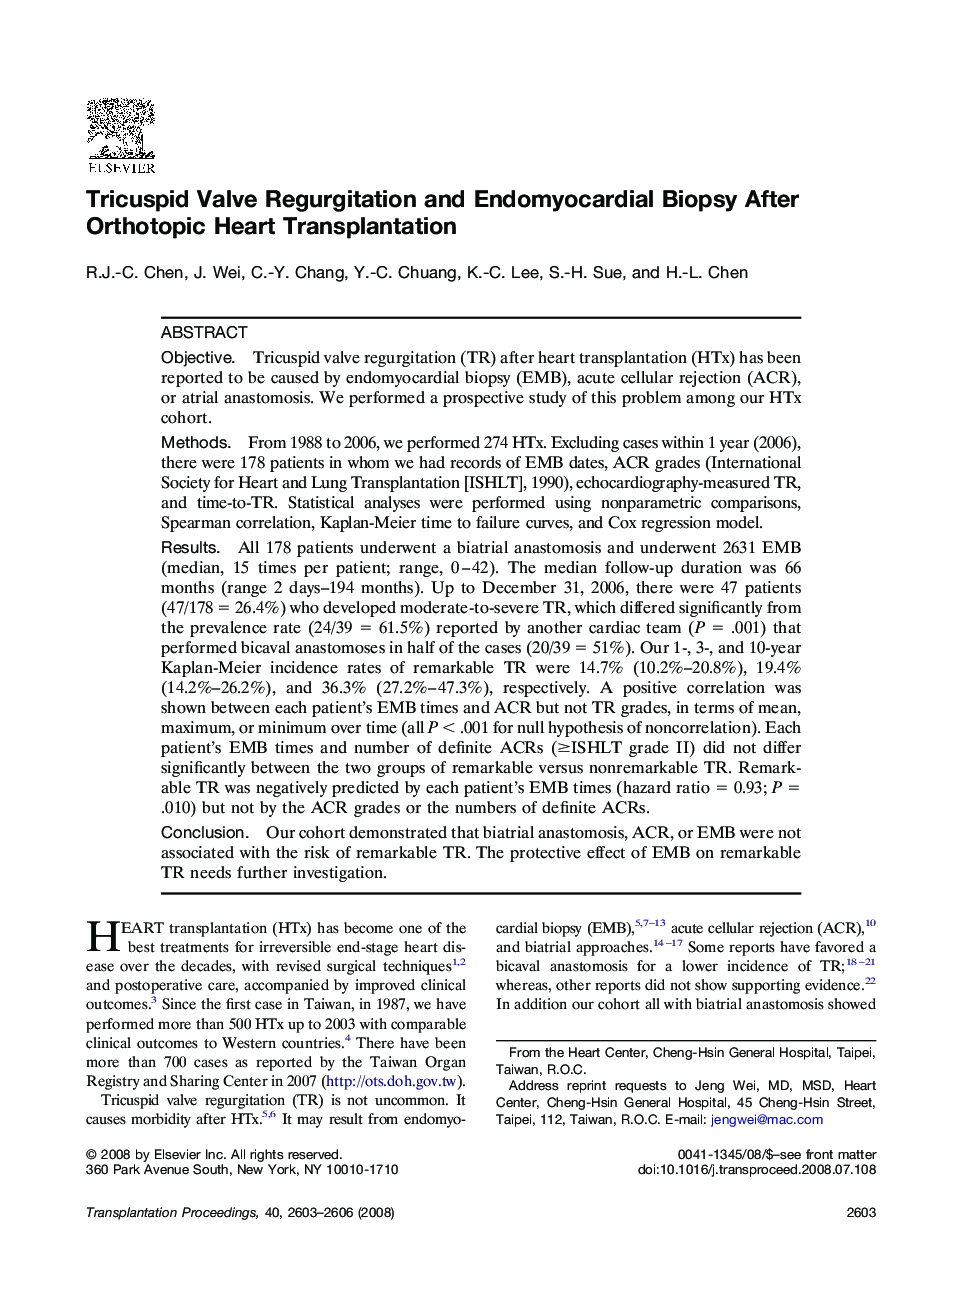 Tricuspid Valve Regurgitation and Endomyocardial Biopsy After Orthotopic Heart Transplantation